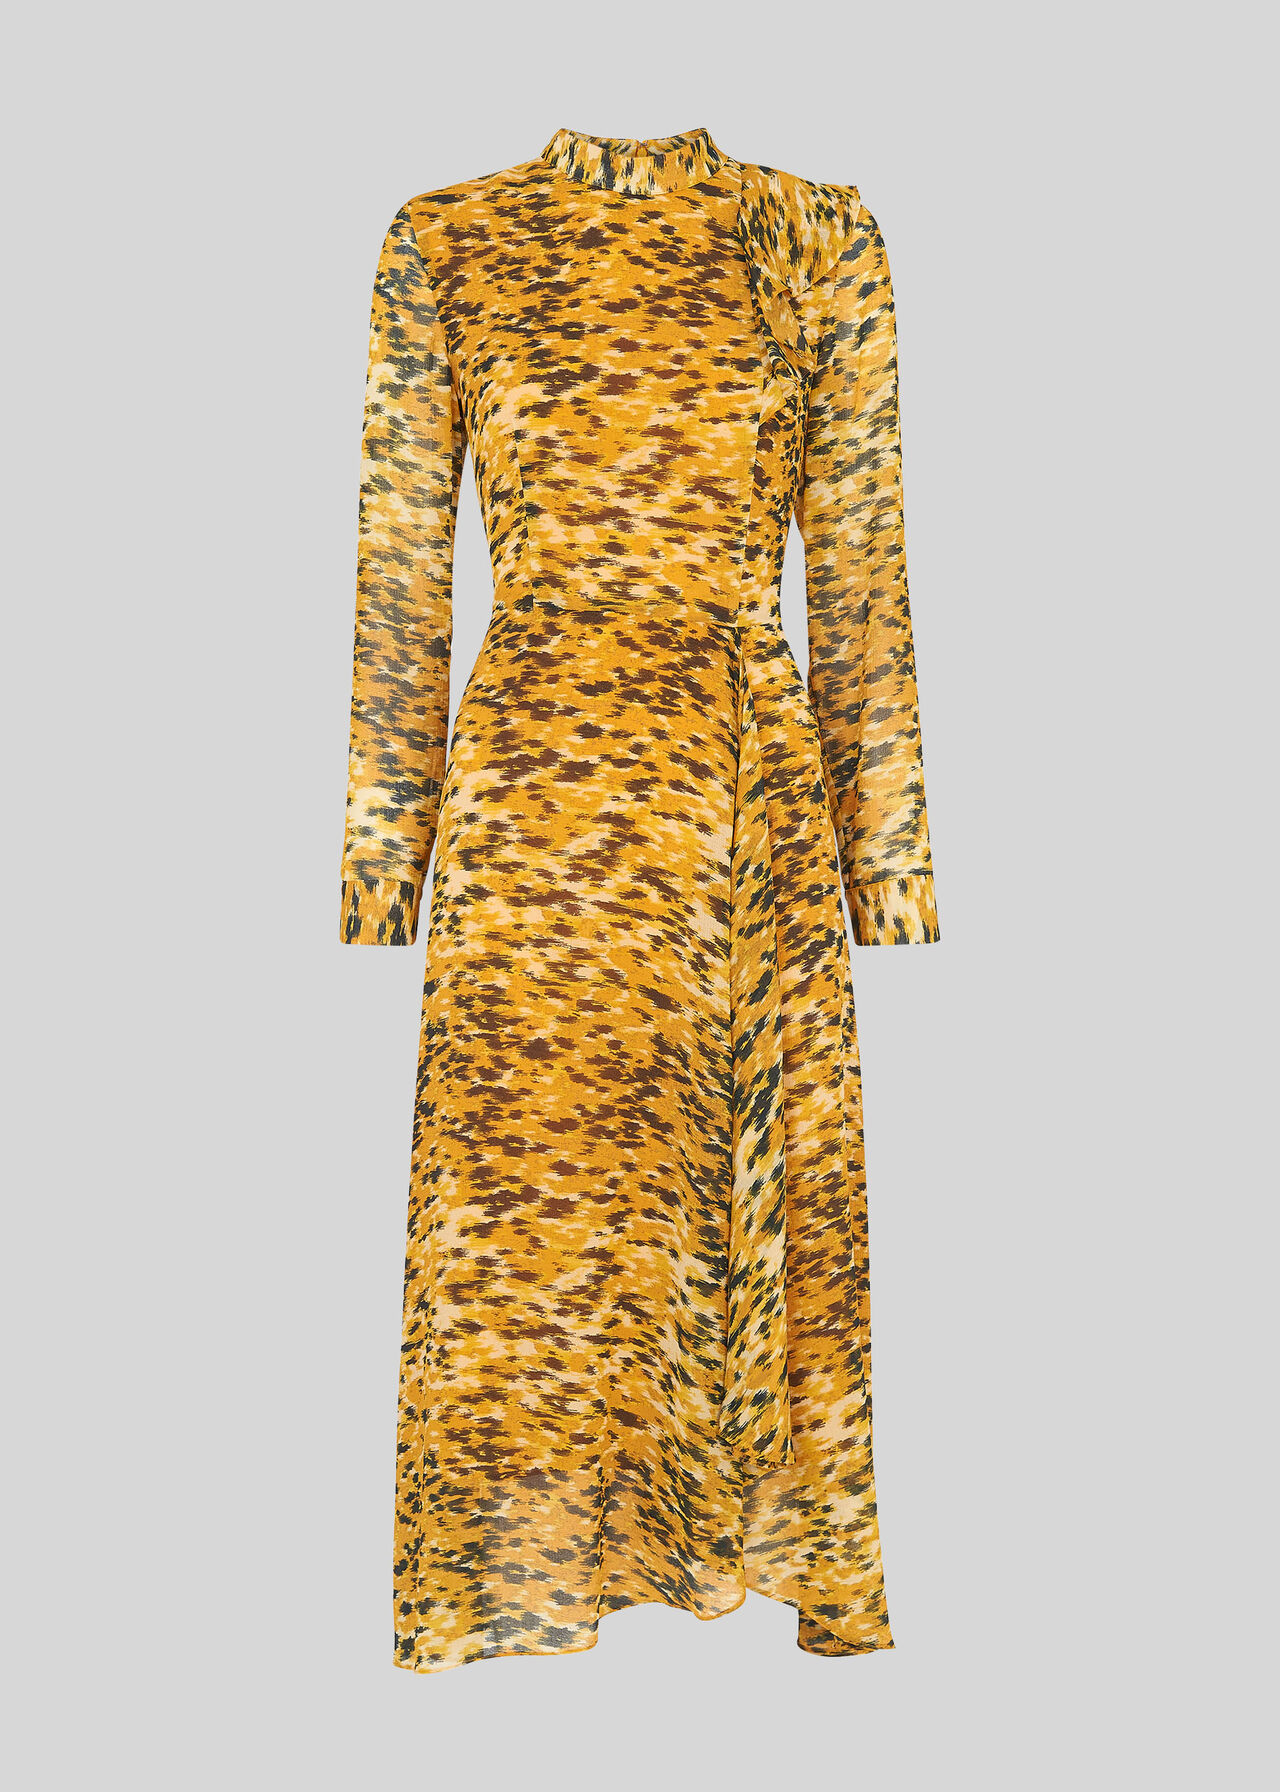 Ines Ikat Animal Dress Yellow/Multi